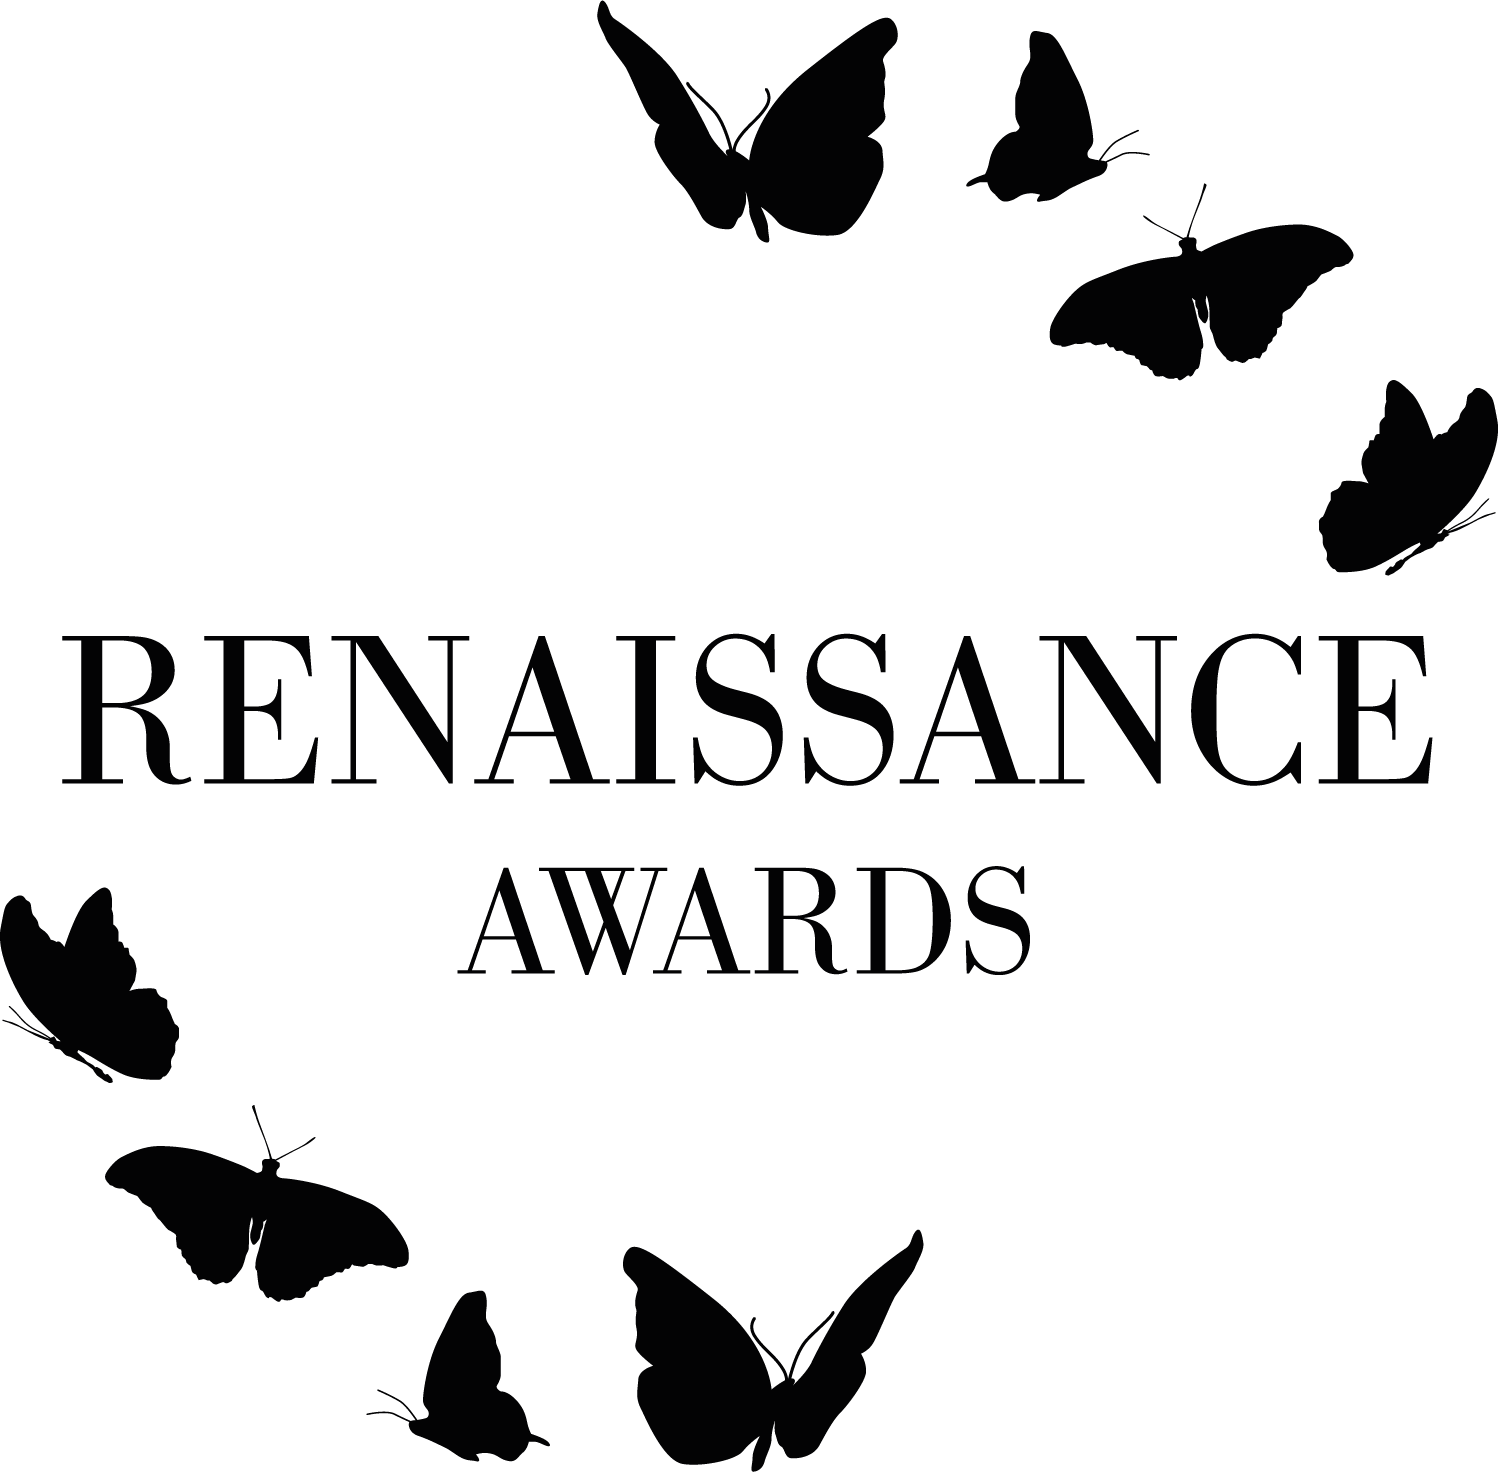 The Renaissance Awards 2021